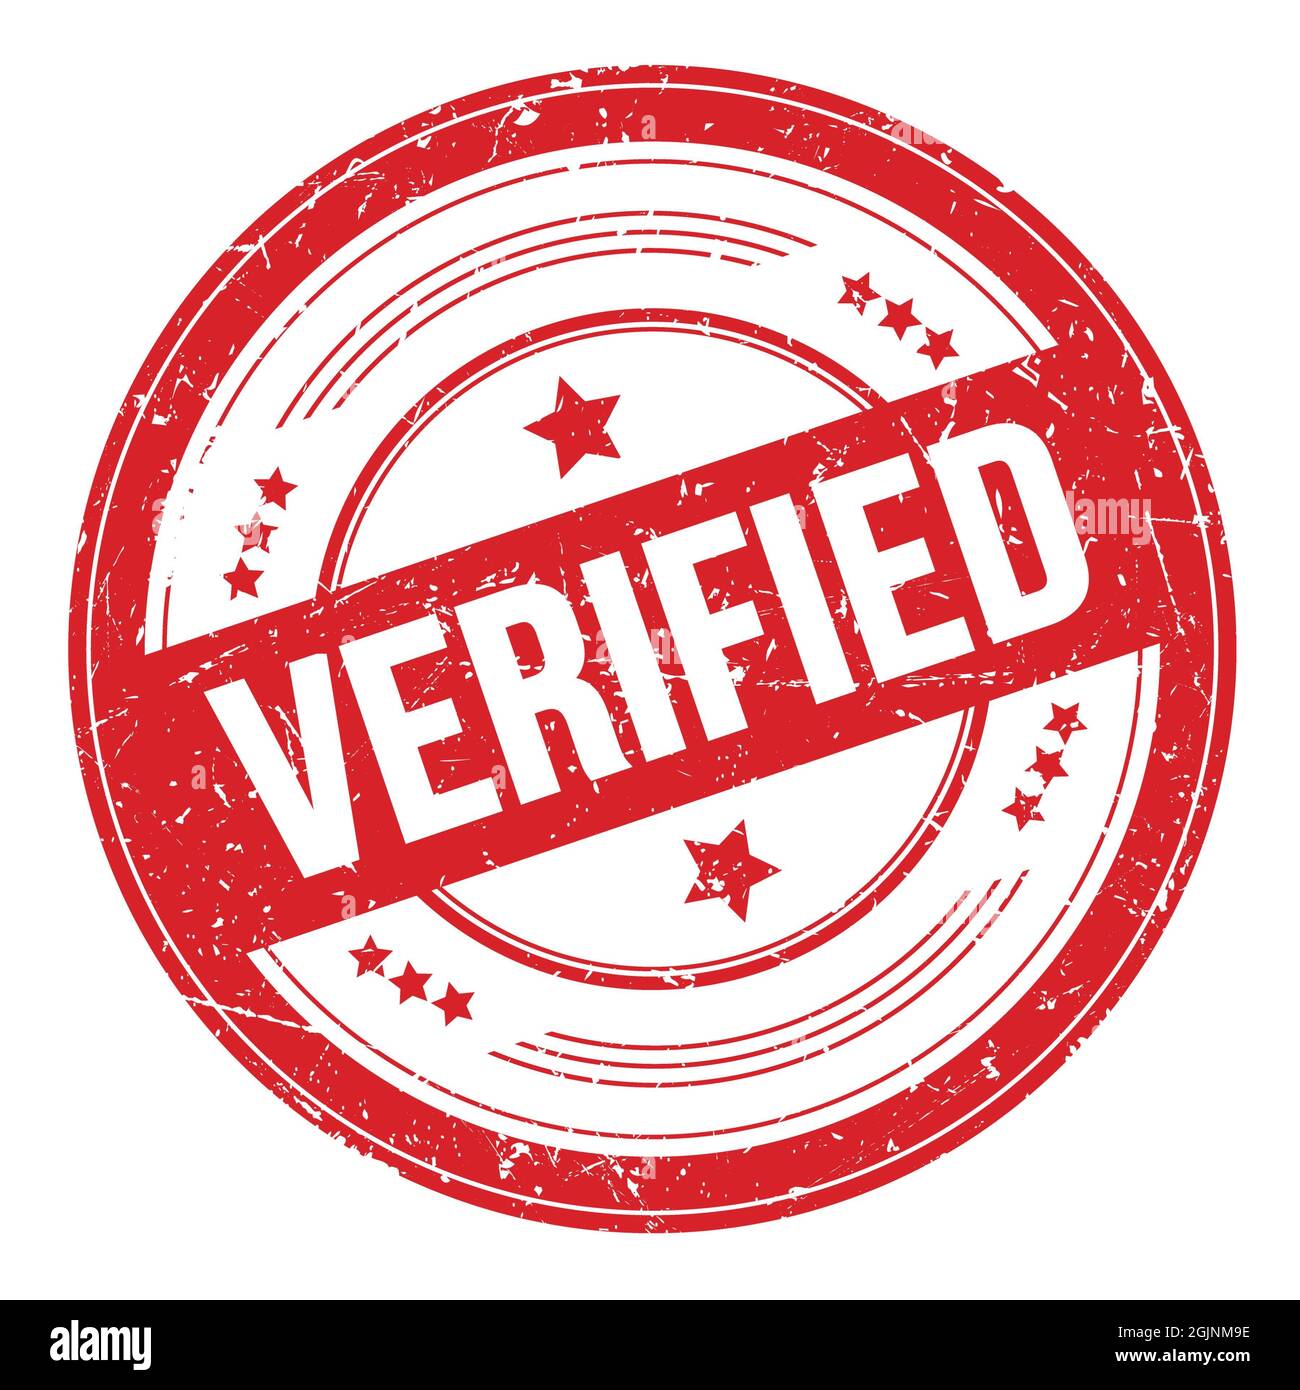 Dbs Verified - Dun & Bradstreet Certification Transparent PNG - 600x511 -  Free Download on NicePNG